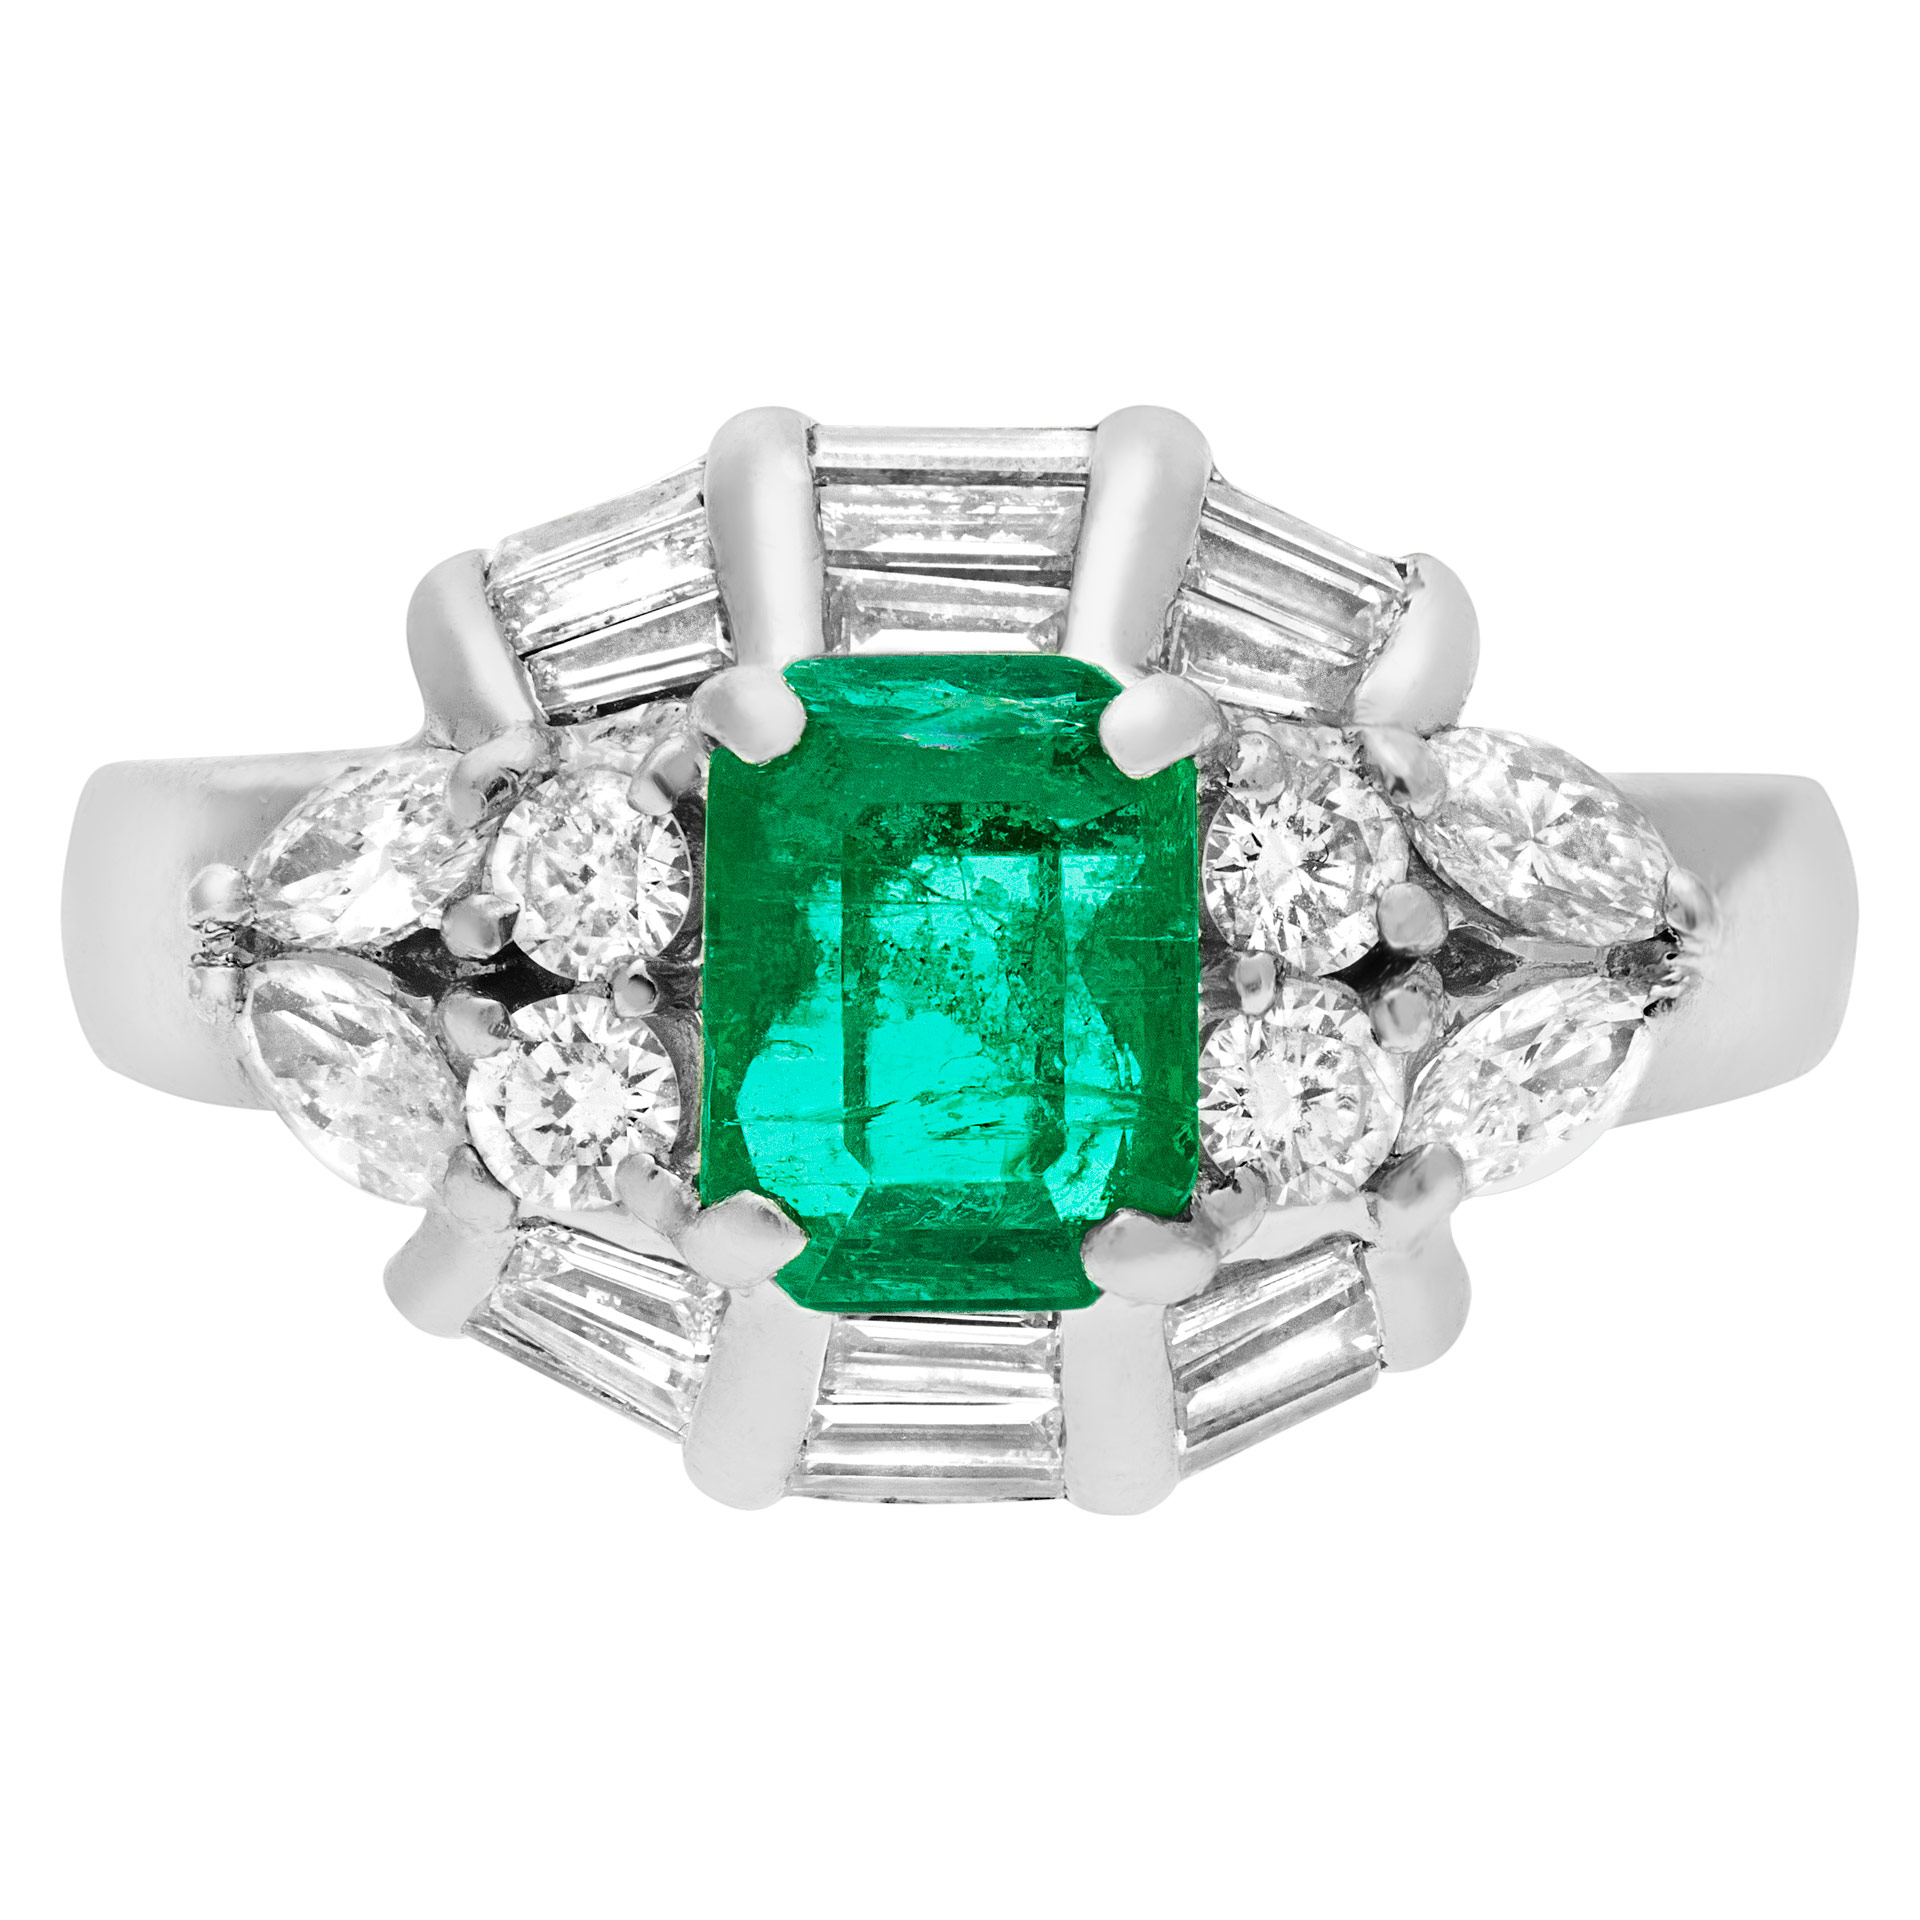 Emerald & diamond ring in platinum. Approx. 1.25 carat emerald.